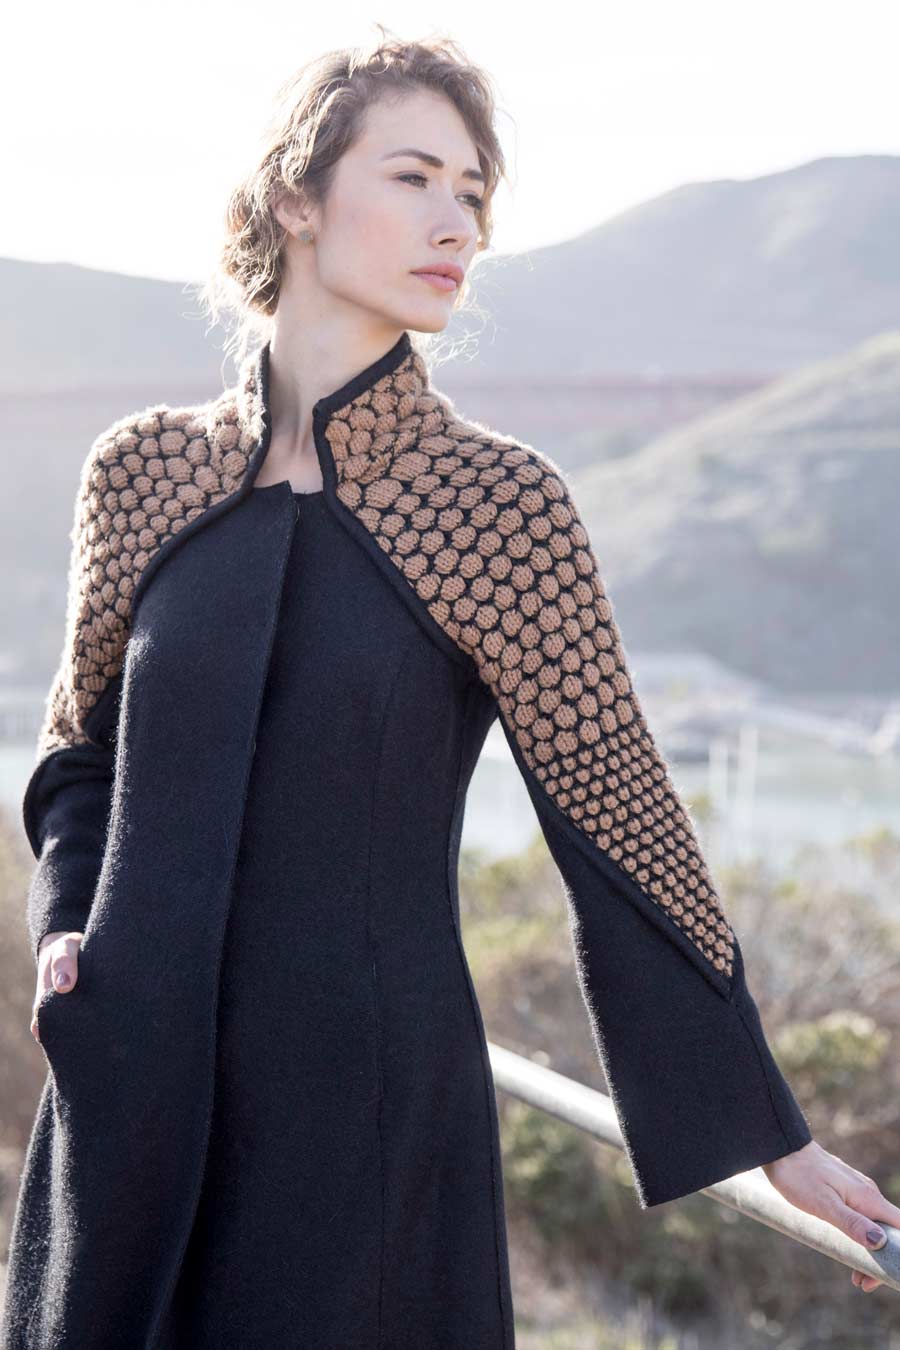 Alpaca Clothing - Alpaca Sweaters, Scarves, Coats & More